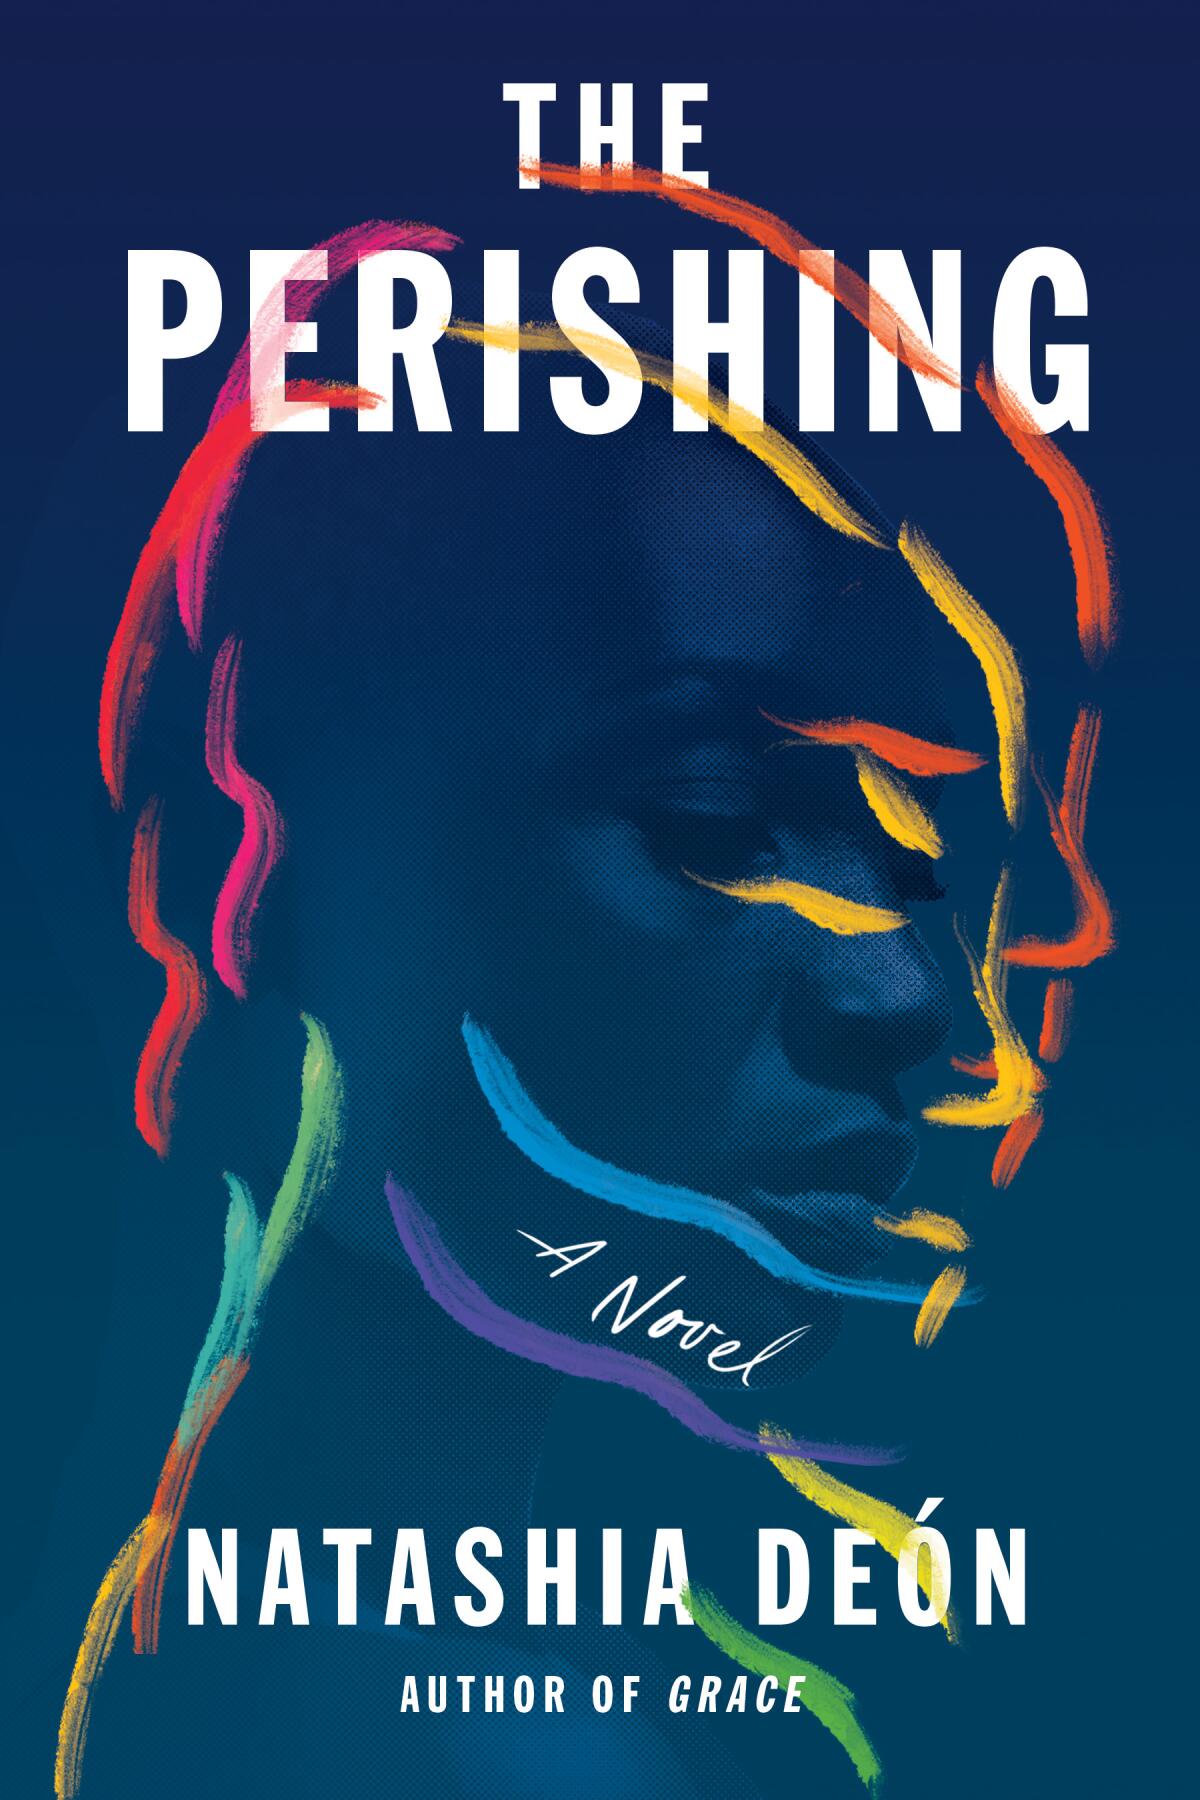 The book cover of "The Perishing" by Natashia Deon